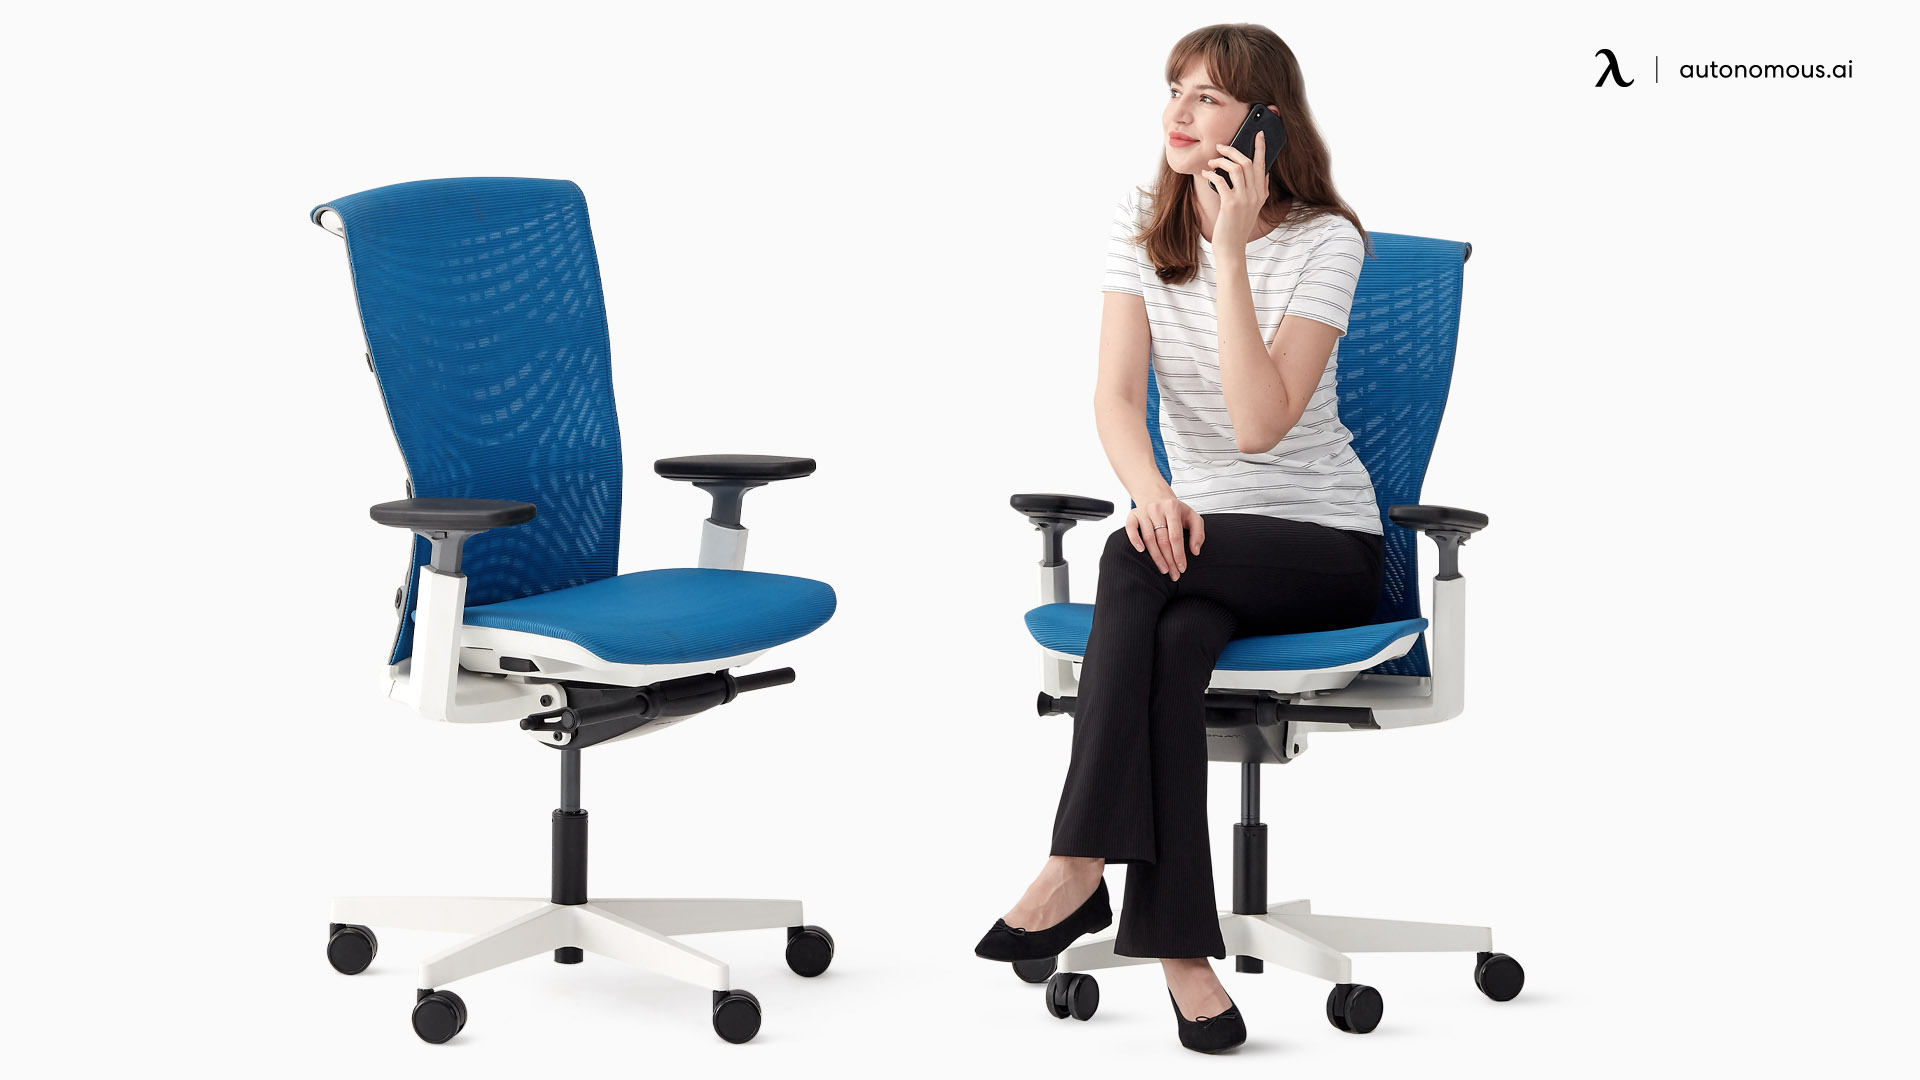 ErgoChair Plus top-rated ergonomic office chair